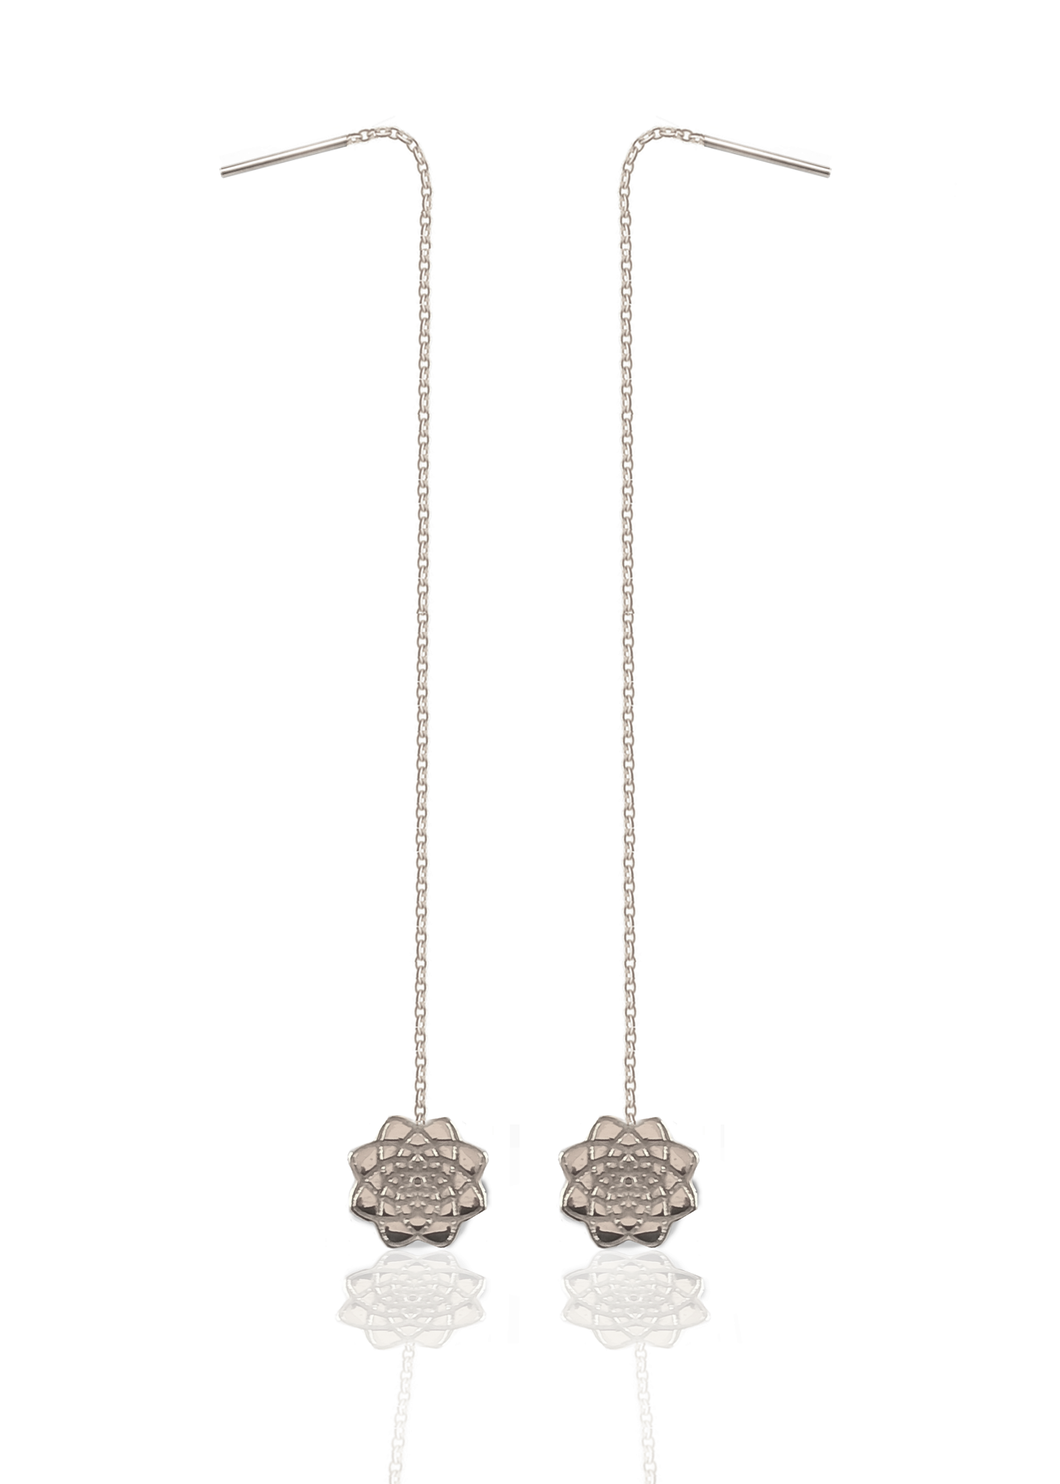 Parallel Dosha Kapha / Vata / Pitta silver 925 earrings